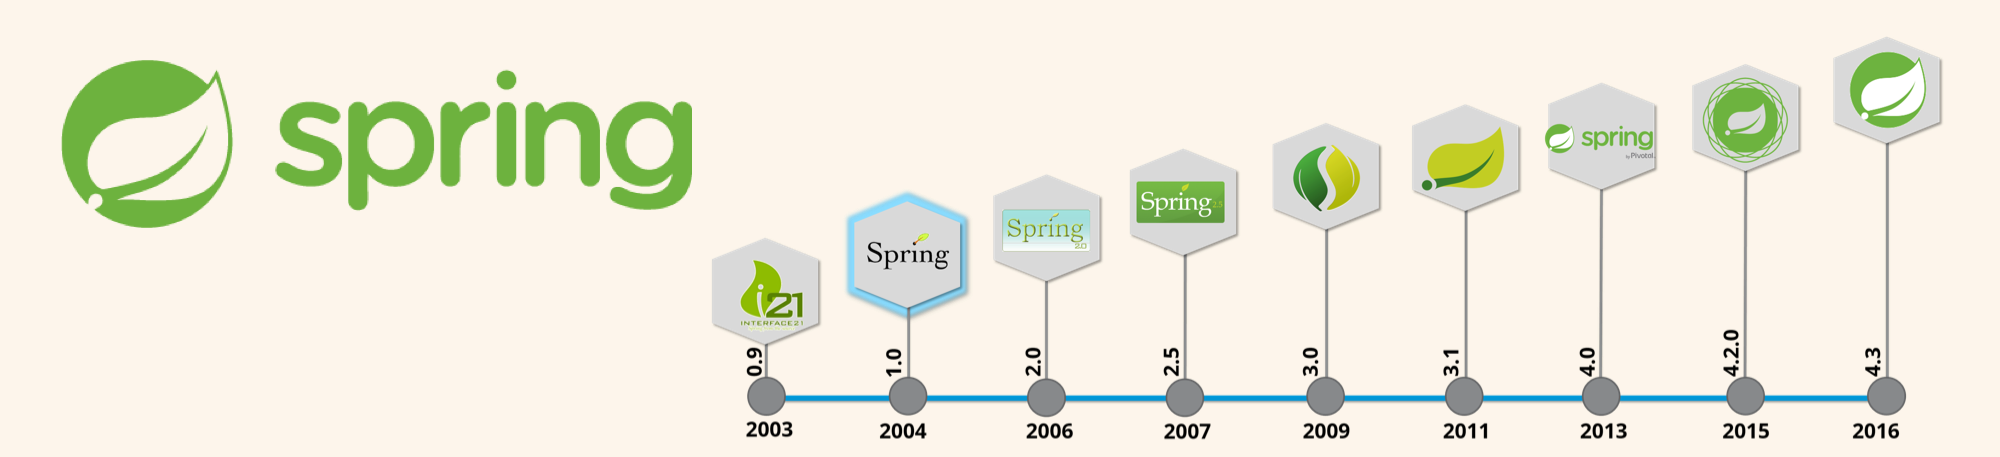 Spring MVC IOT. Spring goal. Spring as source. Import spring